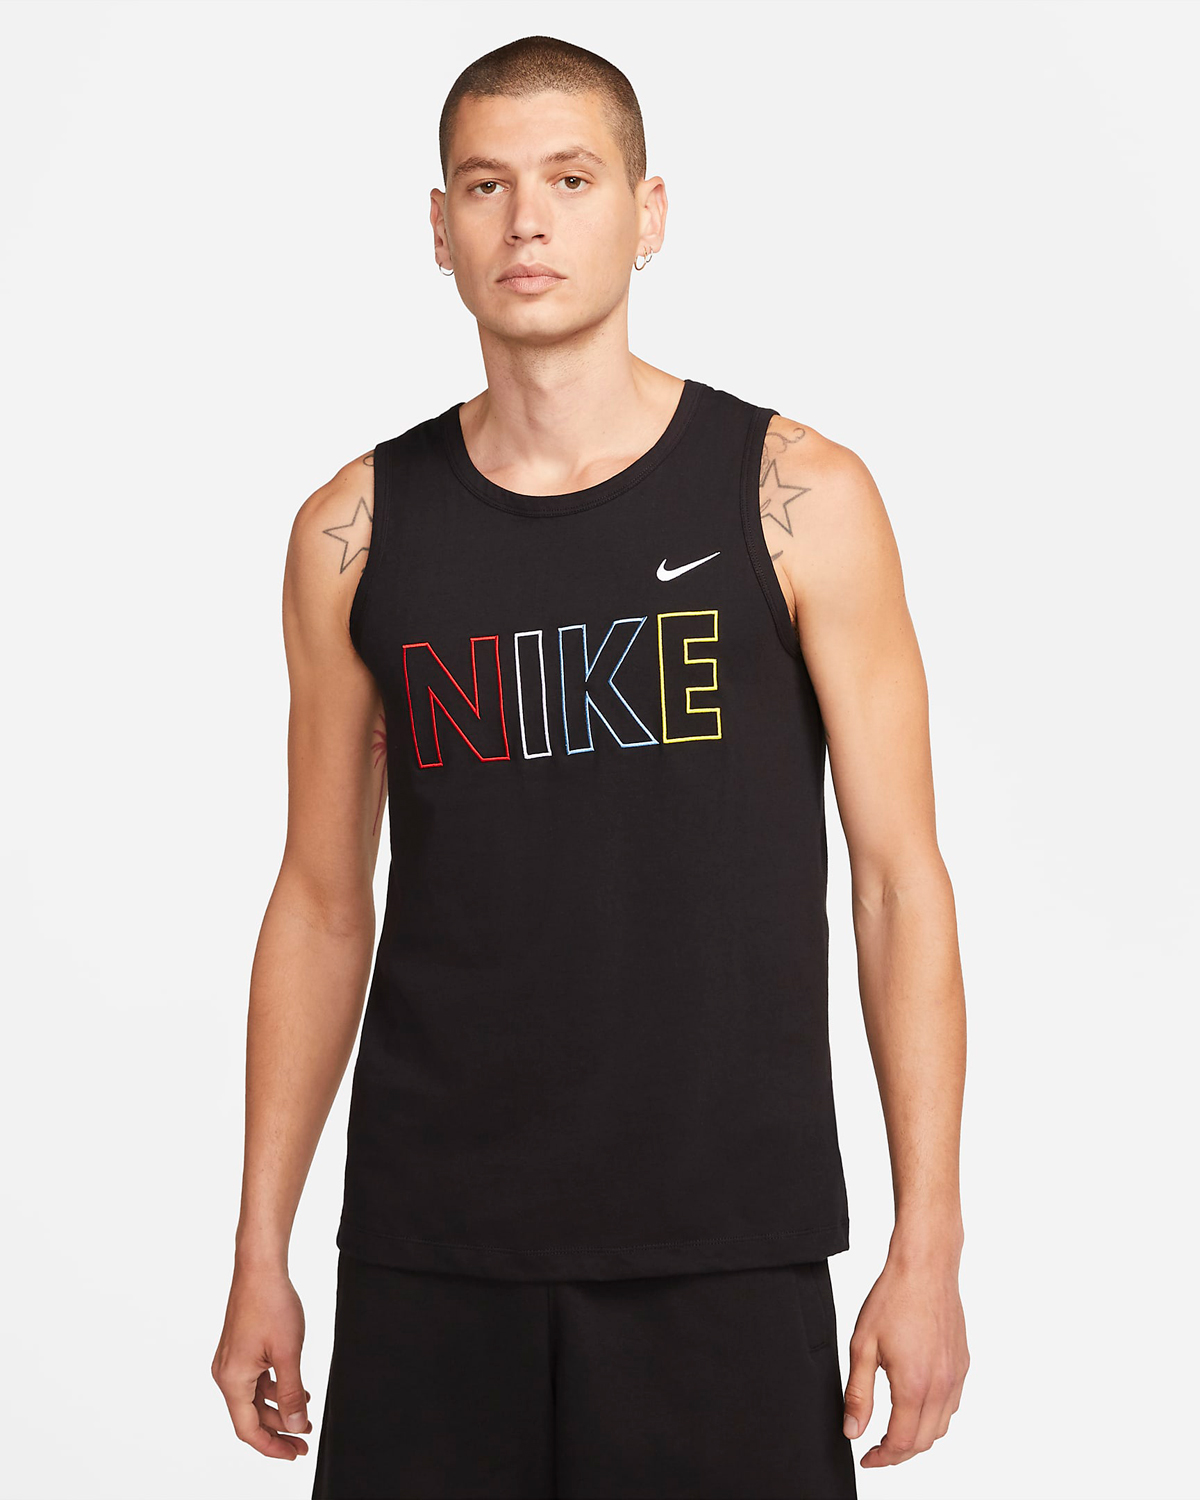 Nike-Sportswear-Graphic-Tank-Top-Black-White-Multi-Color